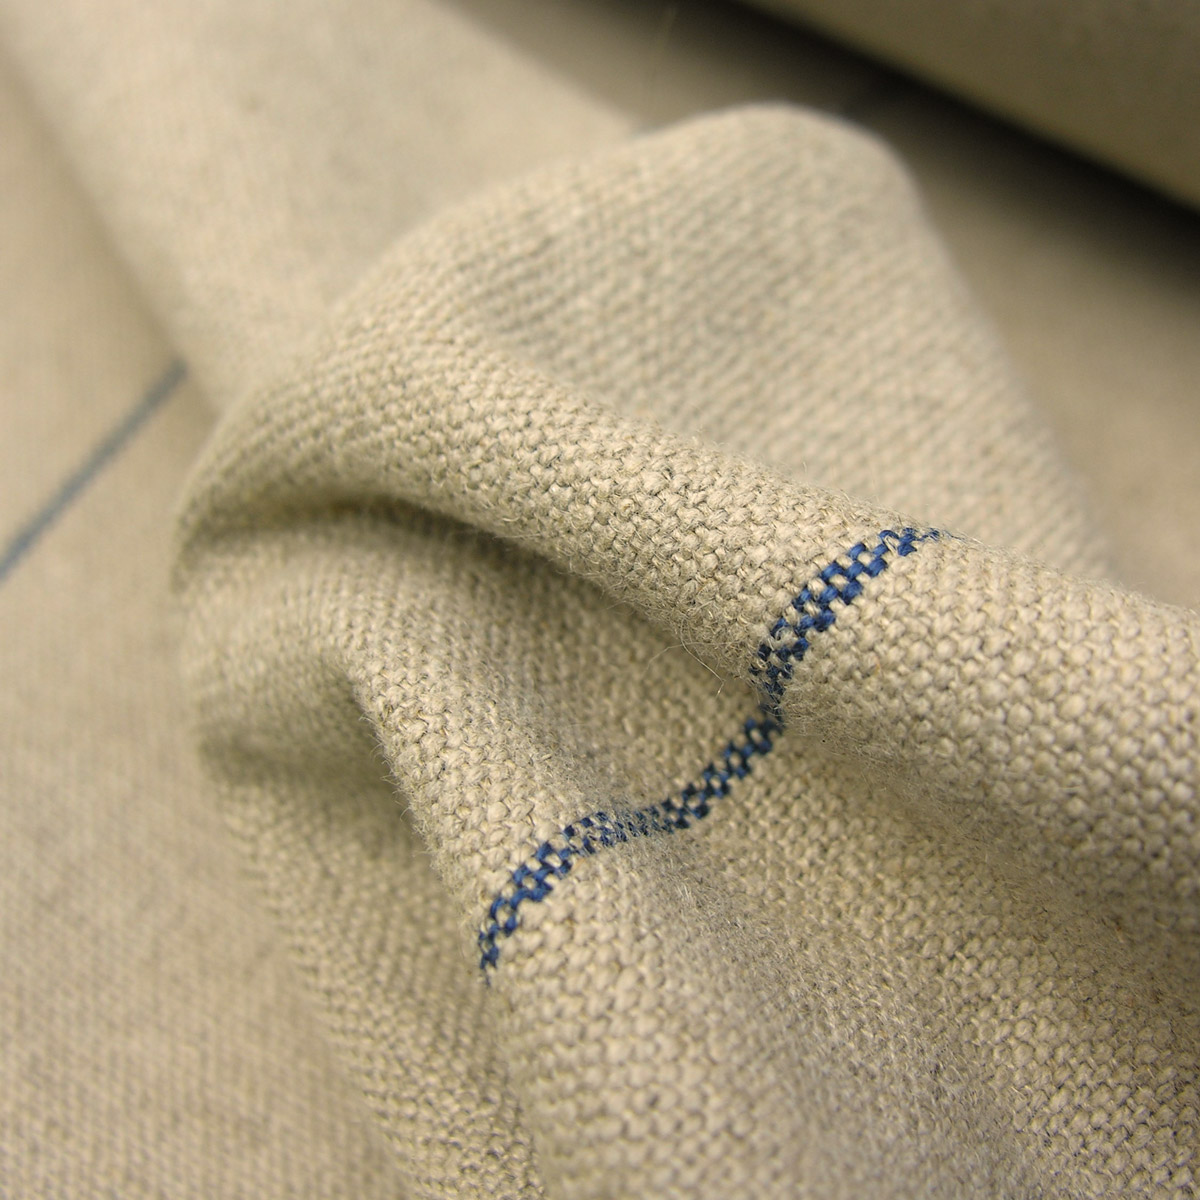 Striped Fabric, Natural Fabrics - Tinsmiths